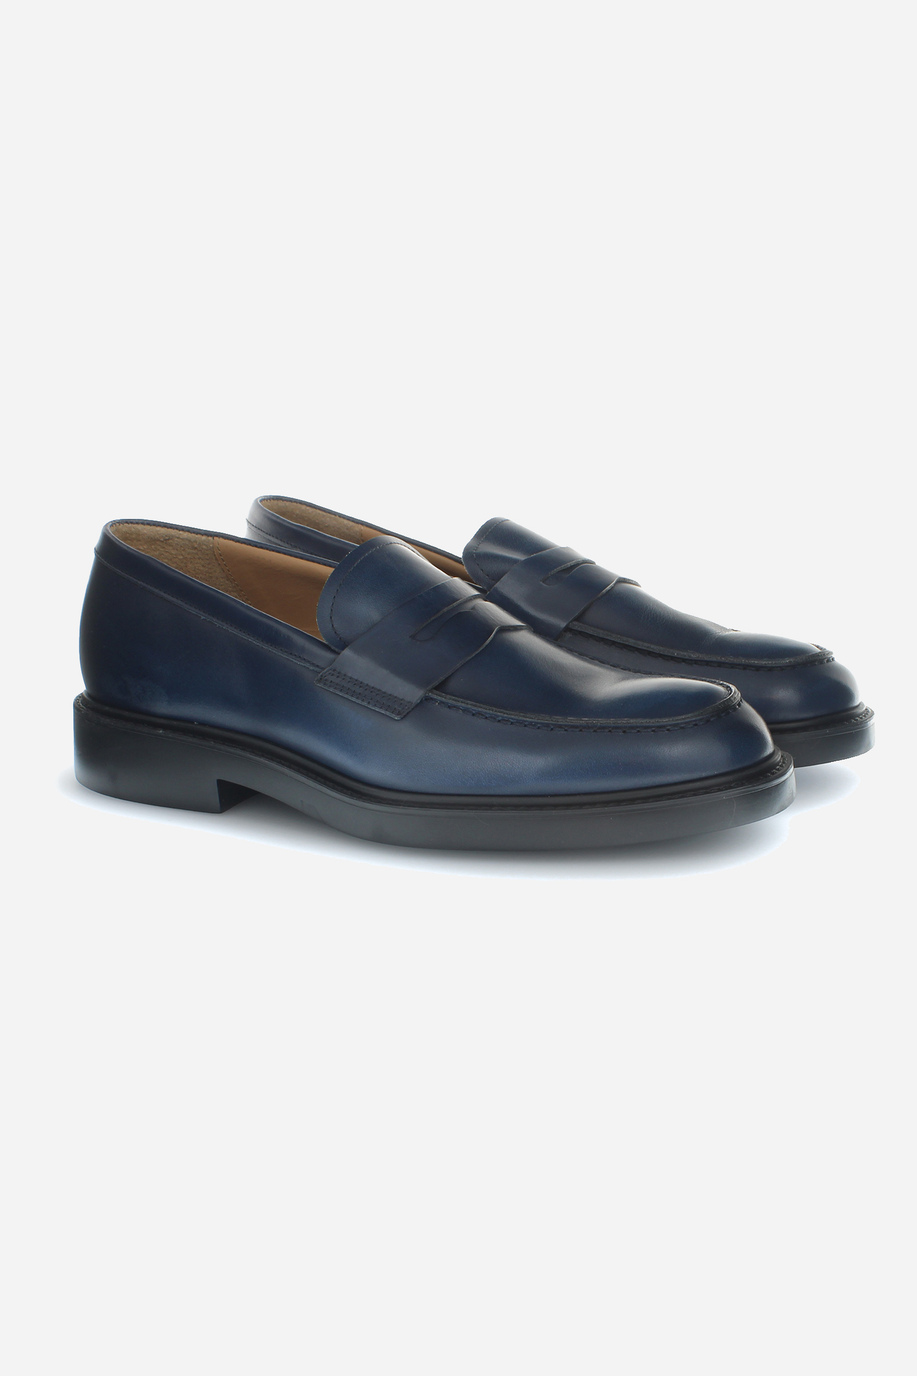 Mokassin aus Leder - Elegante Schuhe | La Martina - Official Online Shop